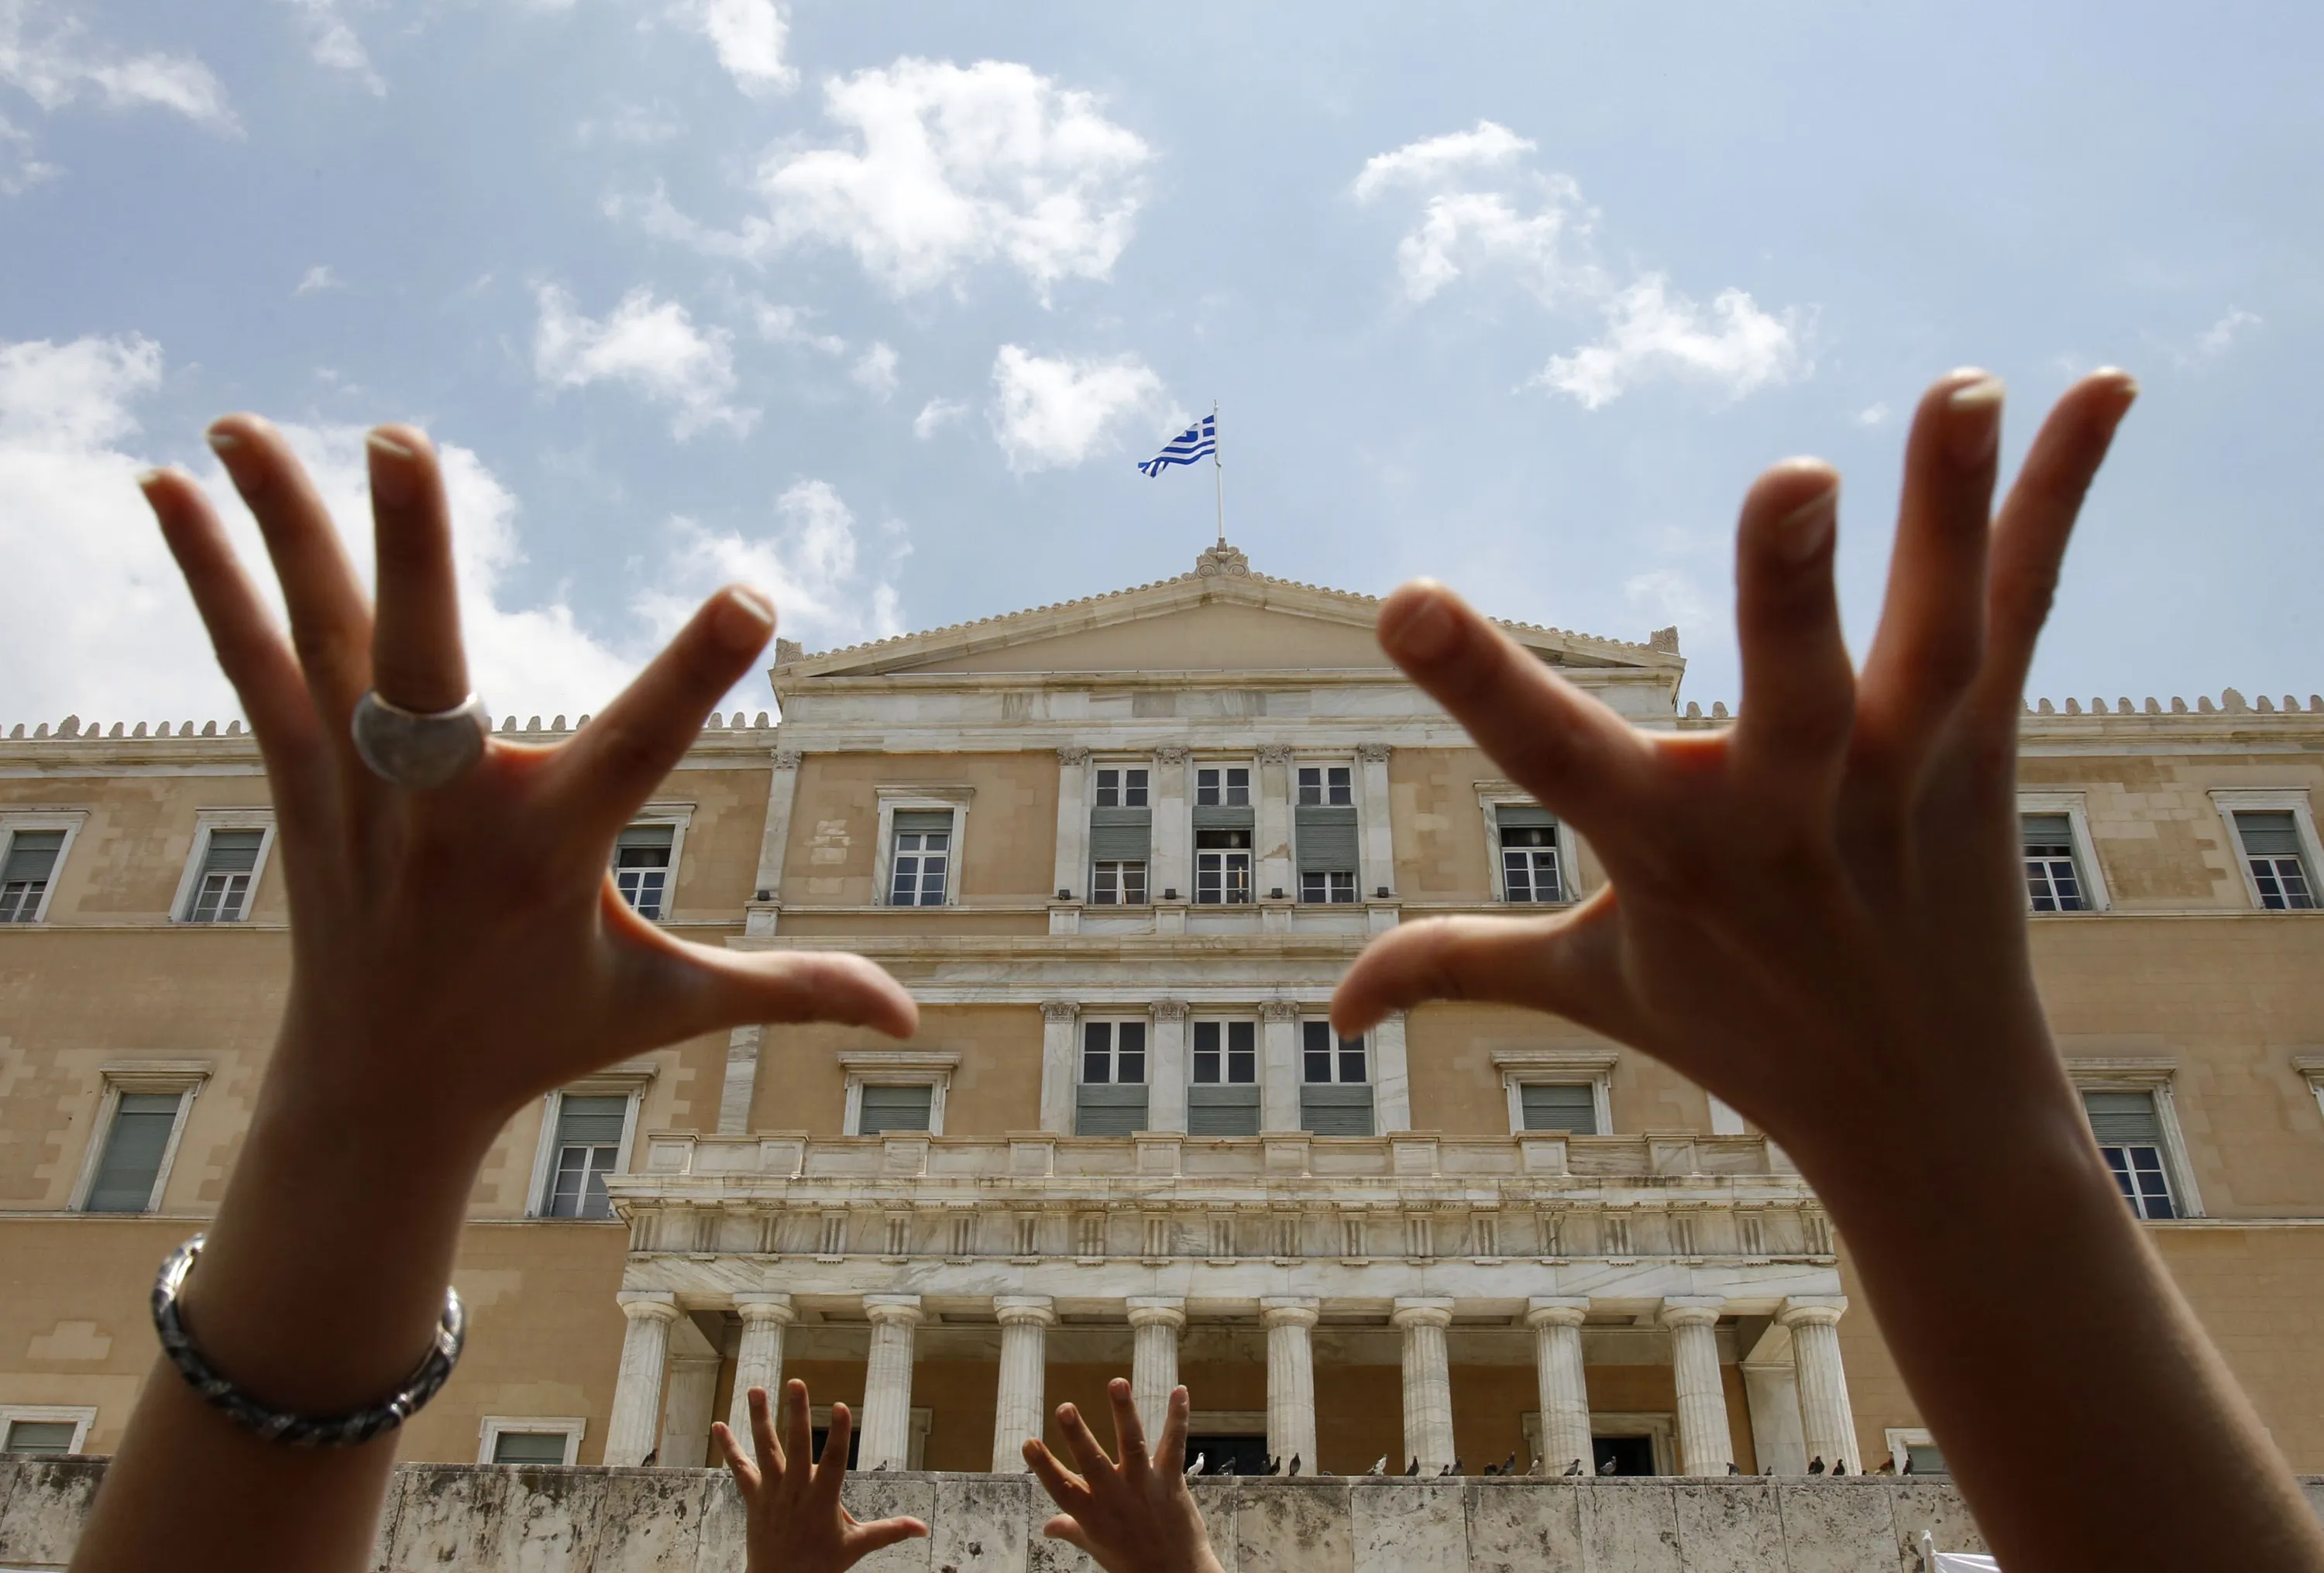 Greece Crisis Retrospective